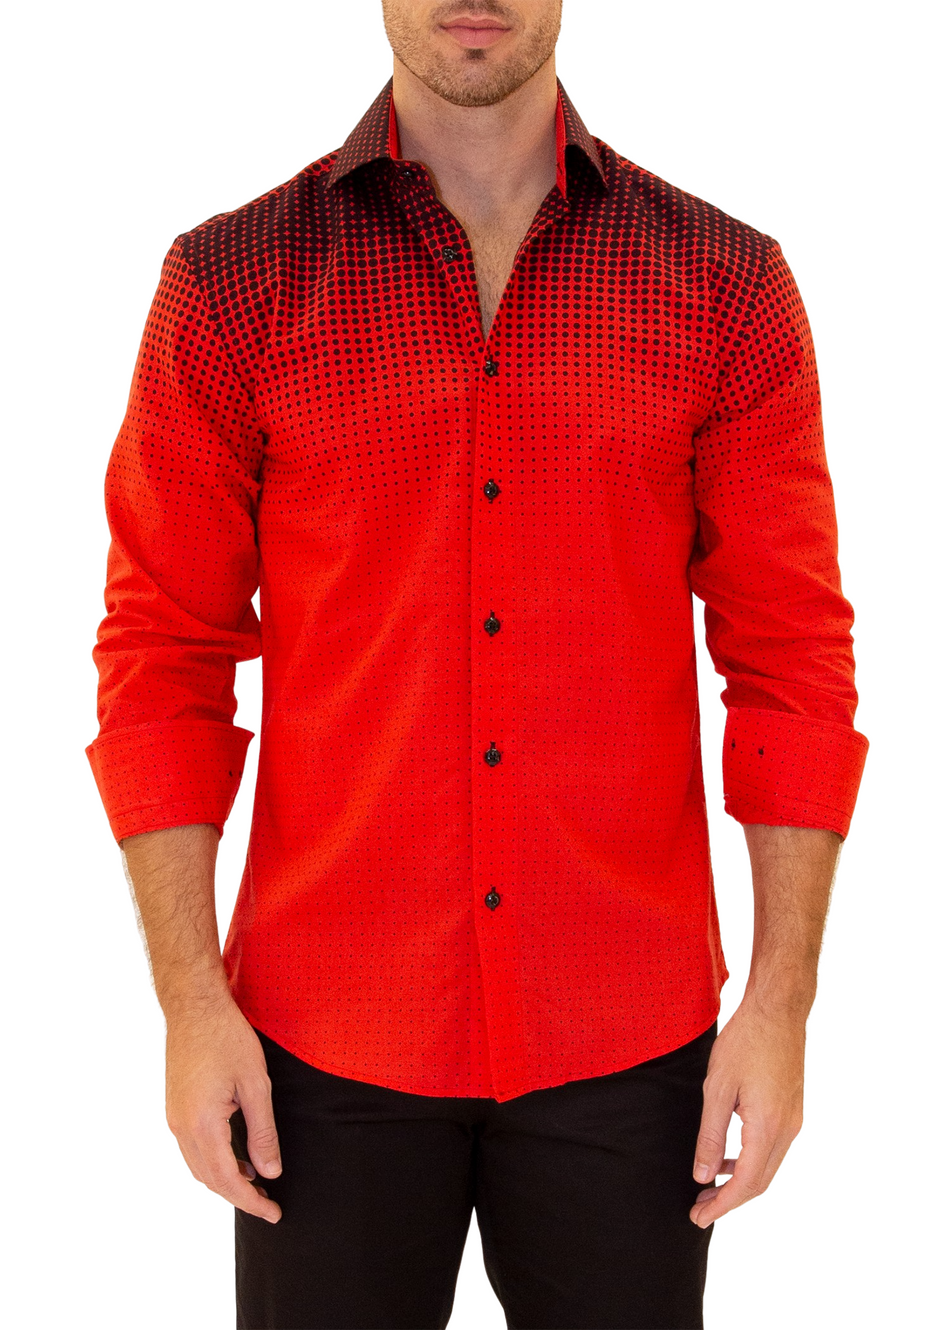 Halftone Effect Red Button Up Long Sleeve Dress Shirt